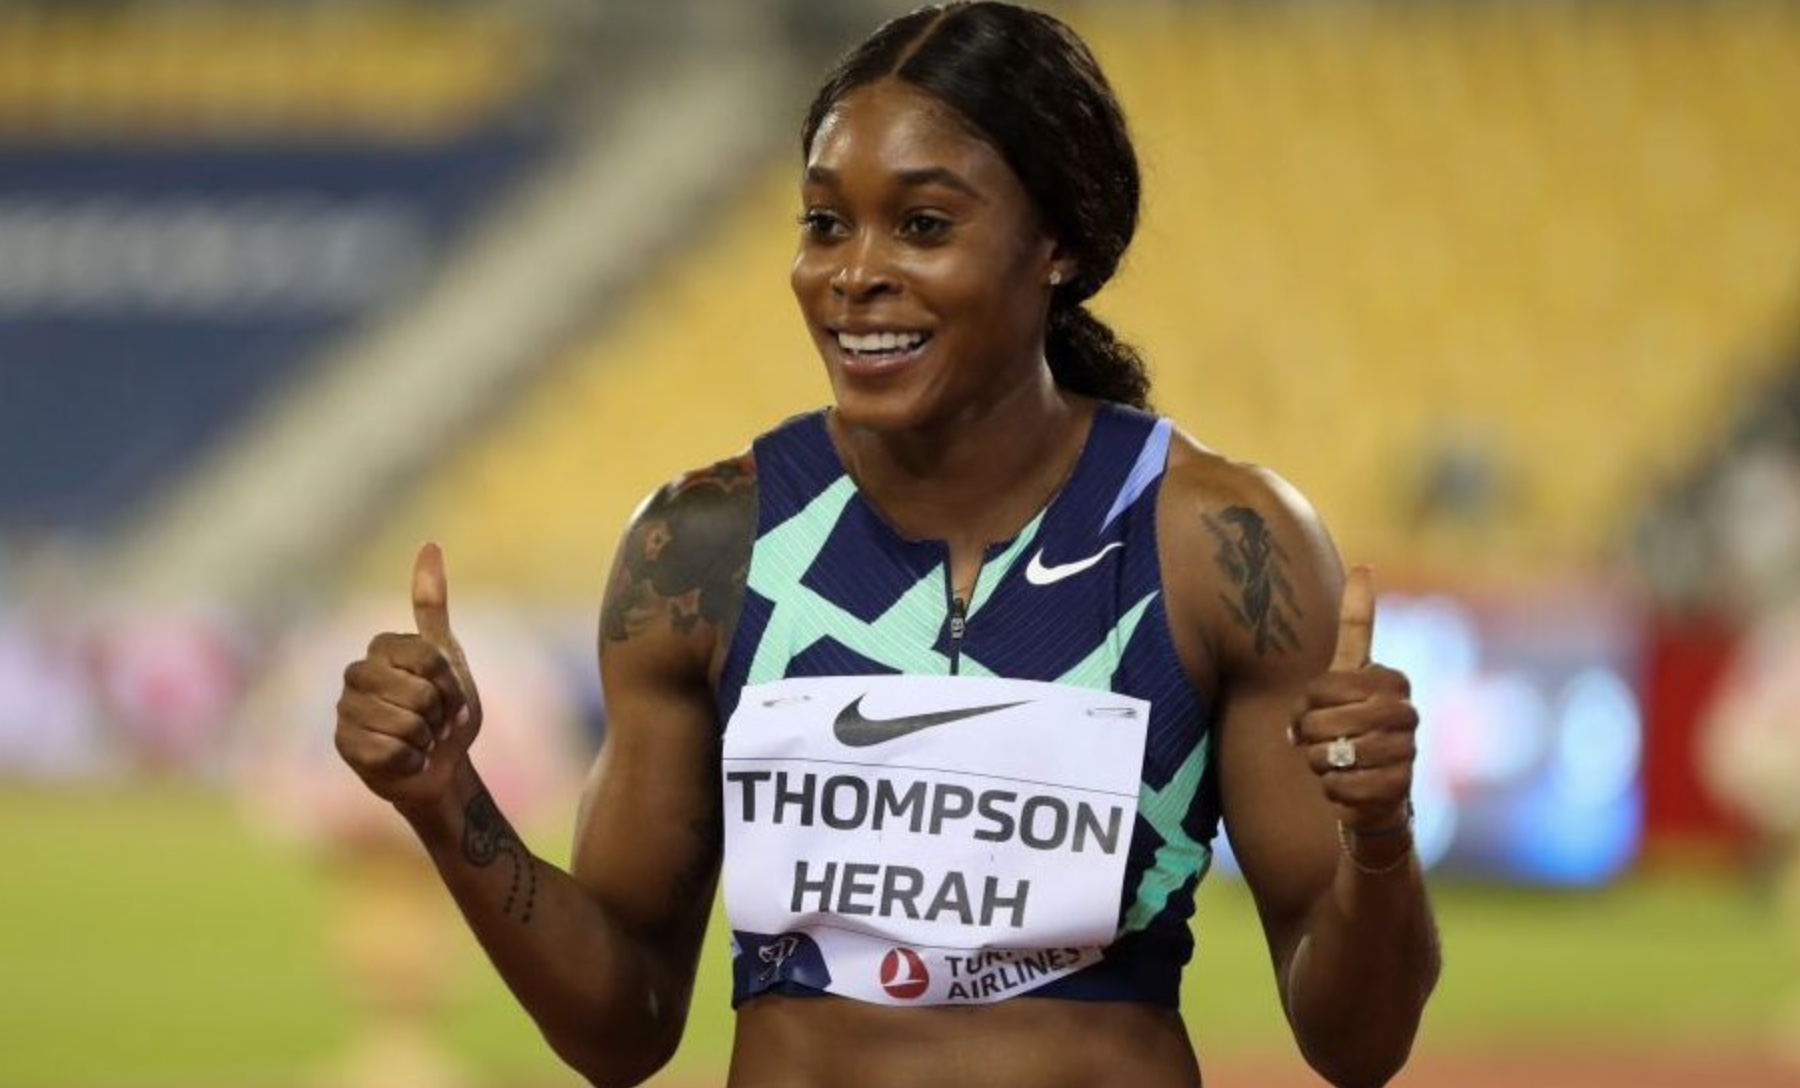 WATCH: Elaine Thompson-Herah Wins 200m - YARDHYPE.